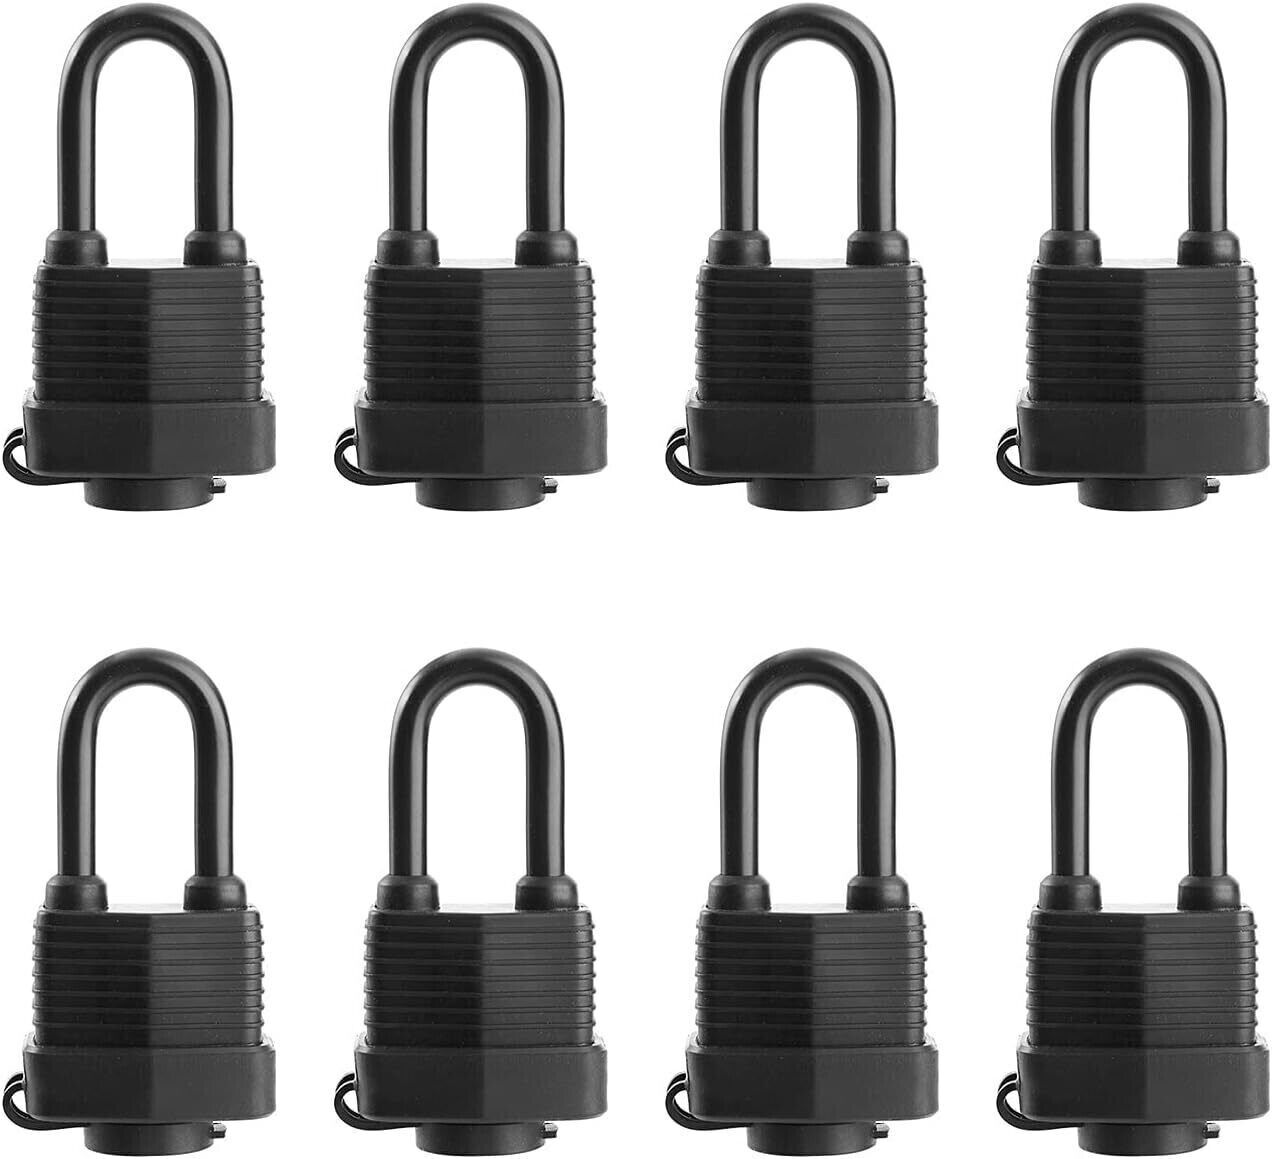 Waterproof Keyed Alike Padlocks: 8 Pack heavy-duty laminated steel locks 1-9/16\